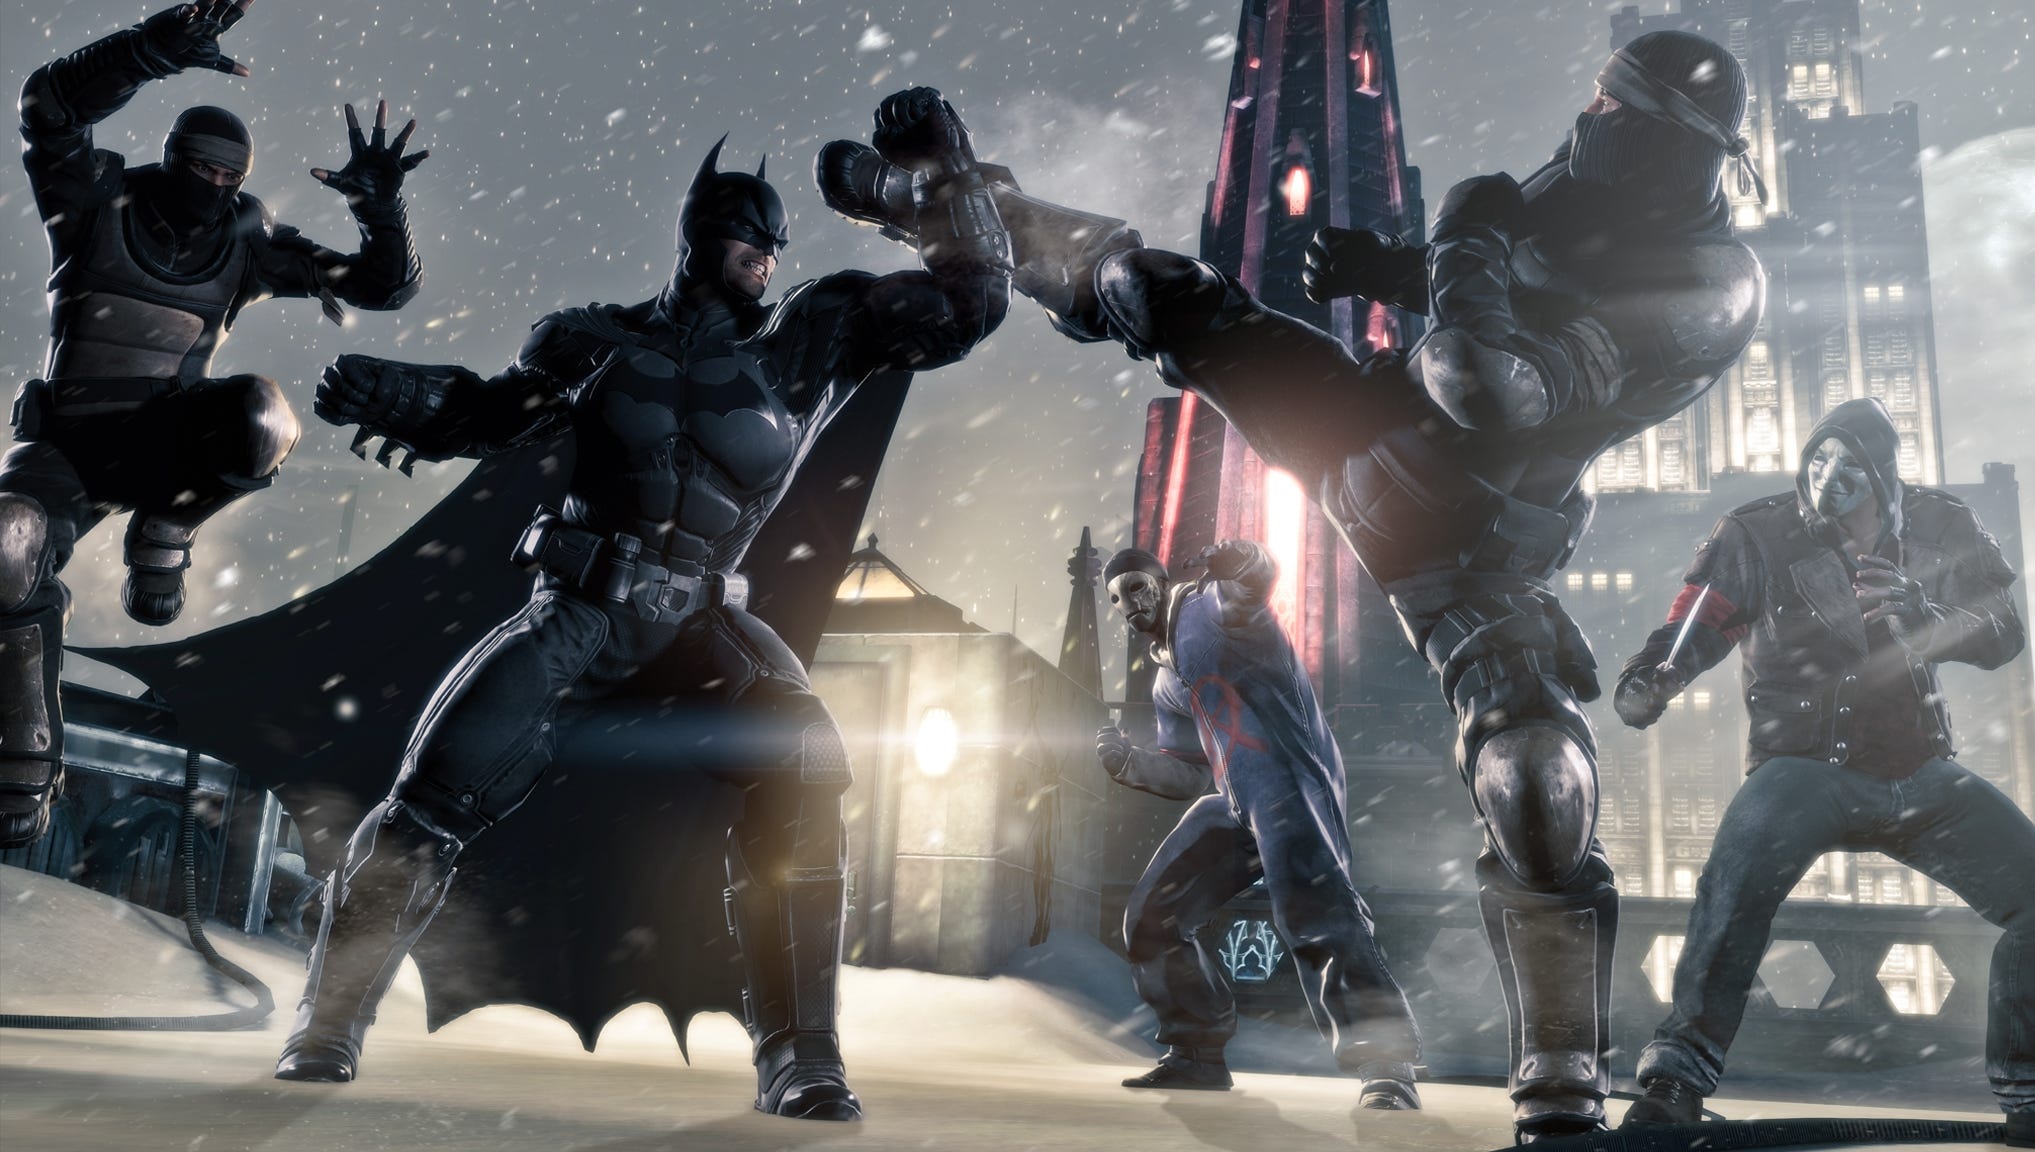 Batman: Arkham Origins' lacks thrills of early games